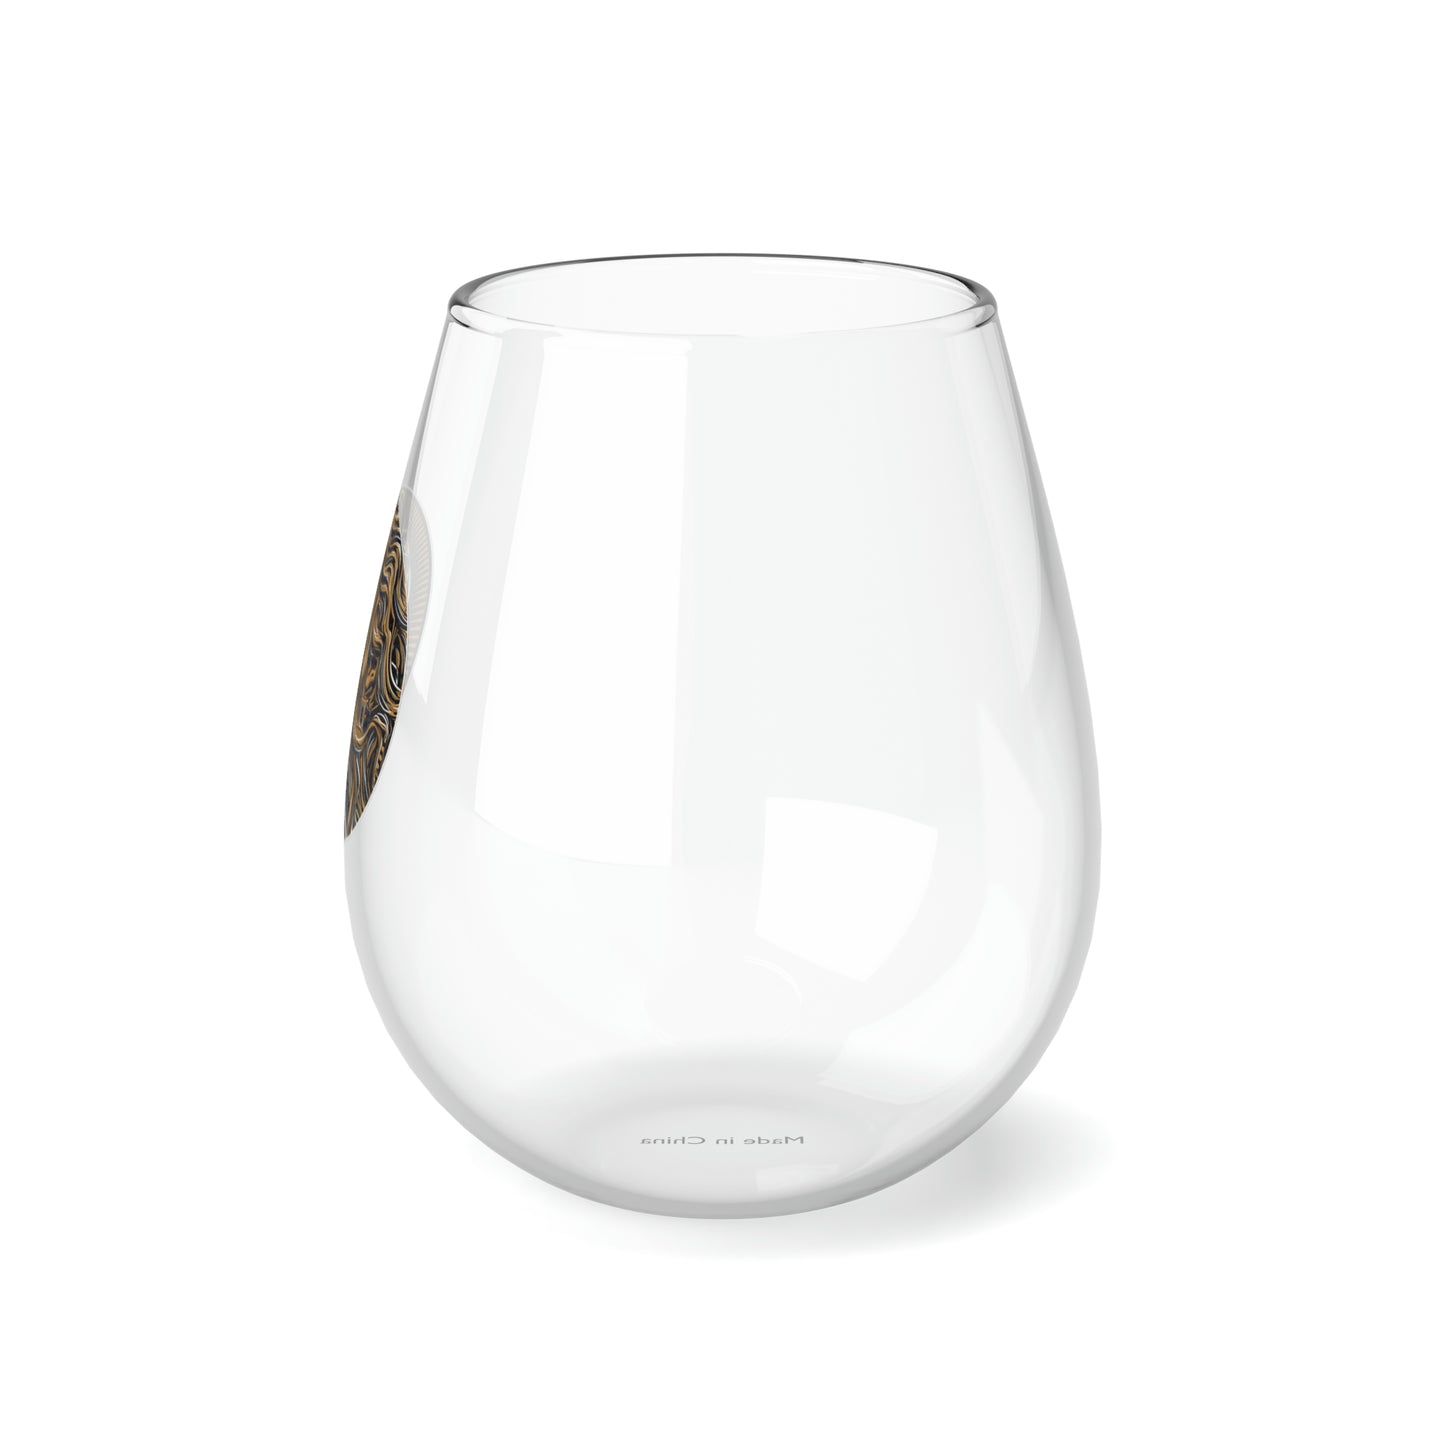 'Jeanne d'Arc' Stemless Wine Glass, 11.75oz